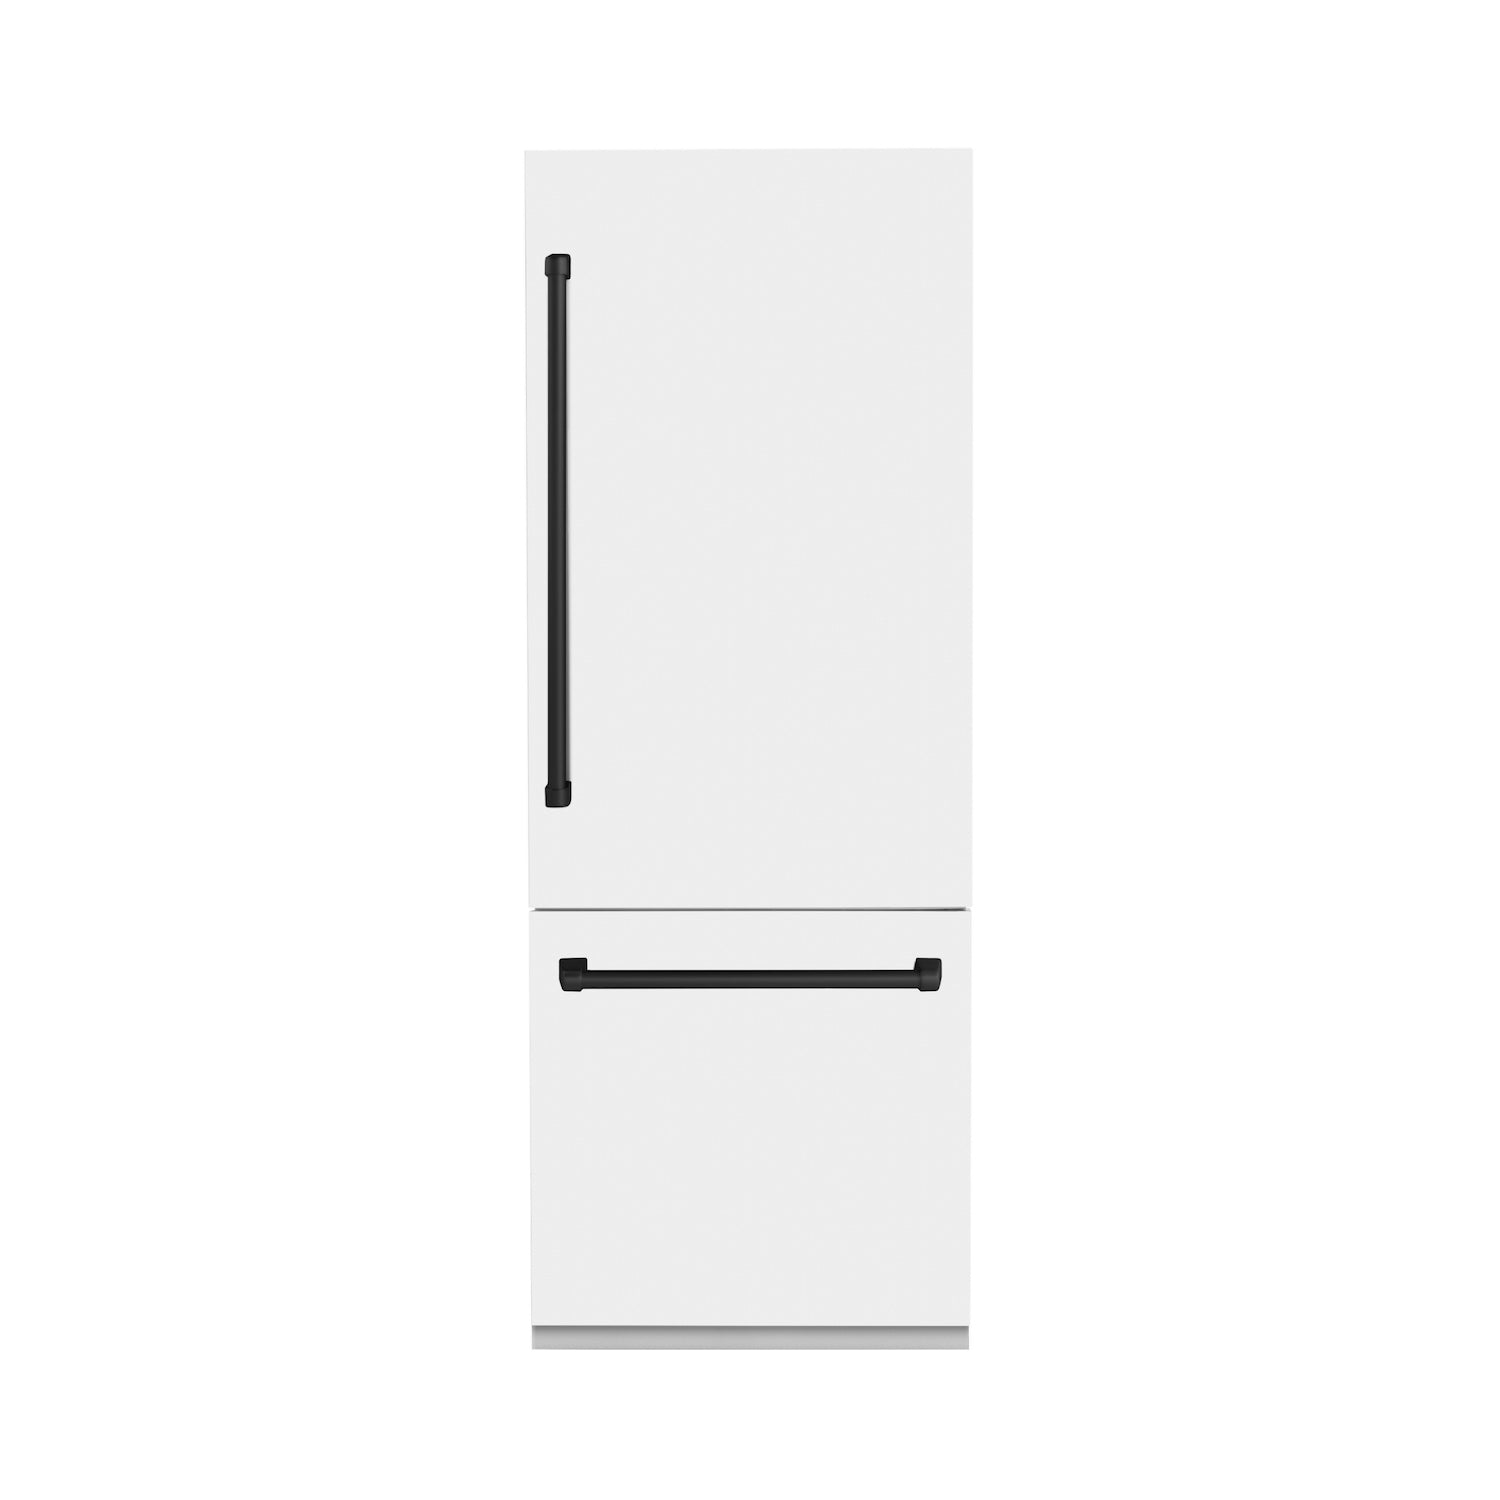 ZLINE Autograph Edition 30" Built-in White Matte Refrigerator with Matte Black Accents front.